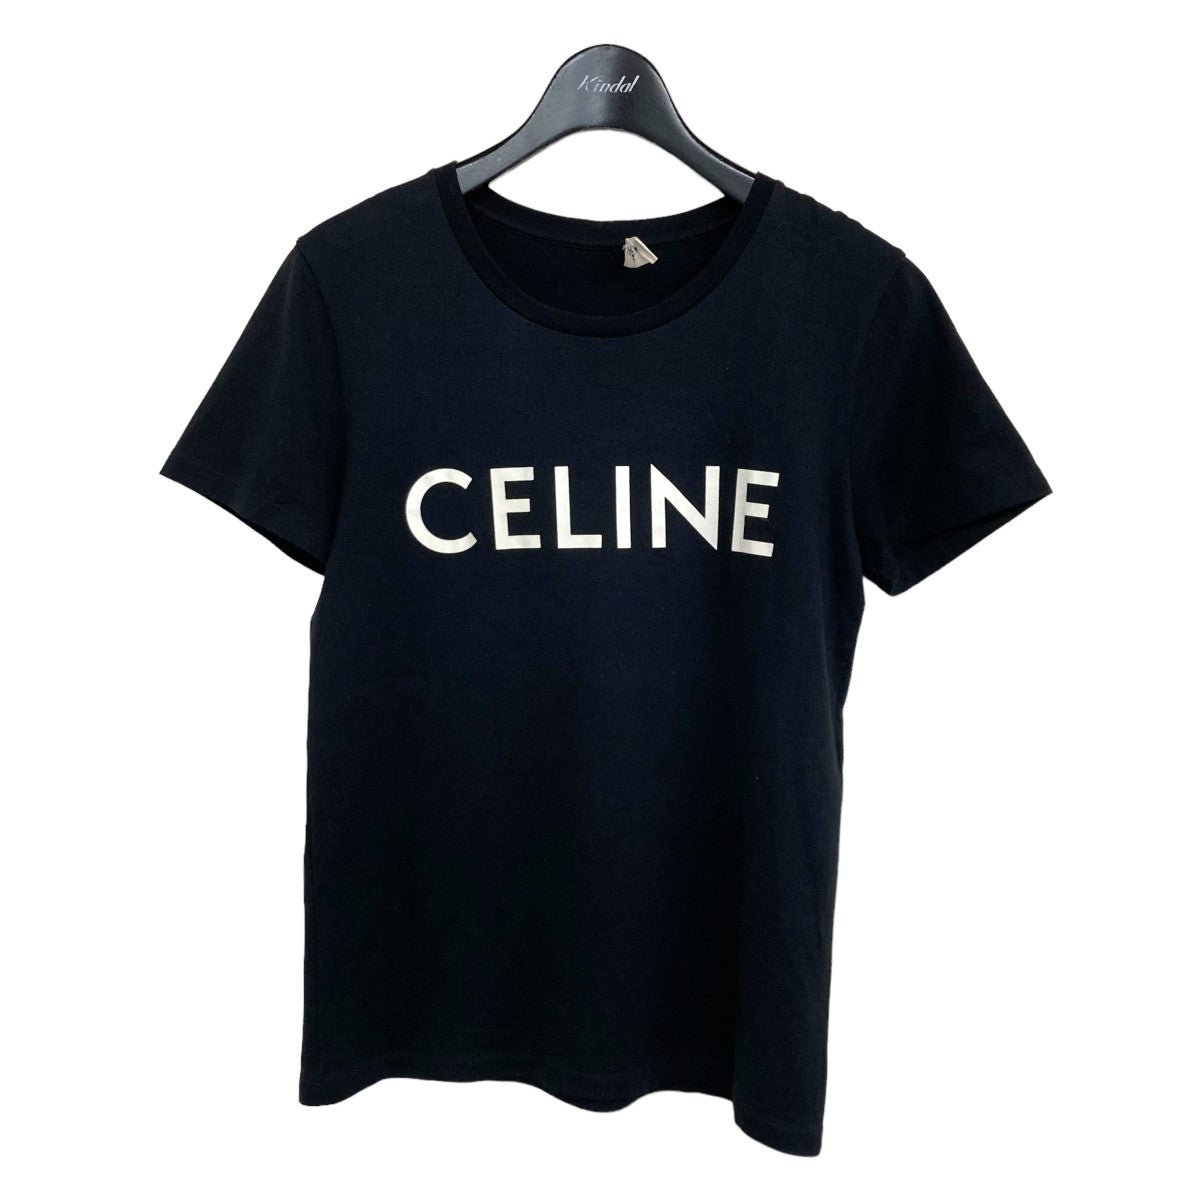 CELINE(セリーヌ) ロゴプリントTシャツ2X314916G 2X314916G ブラック 